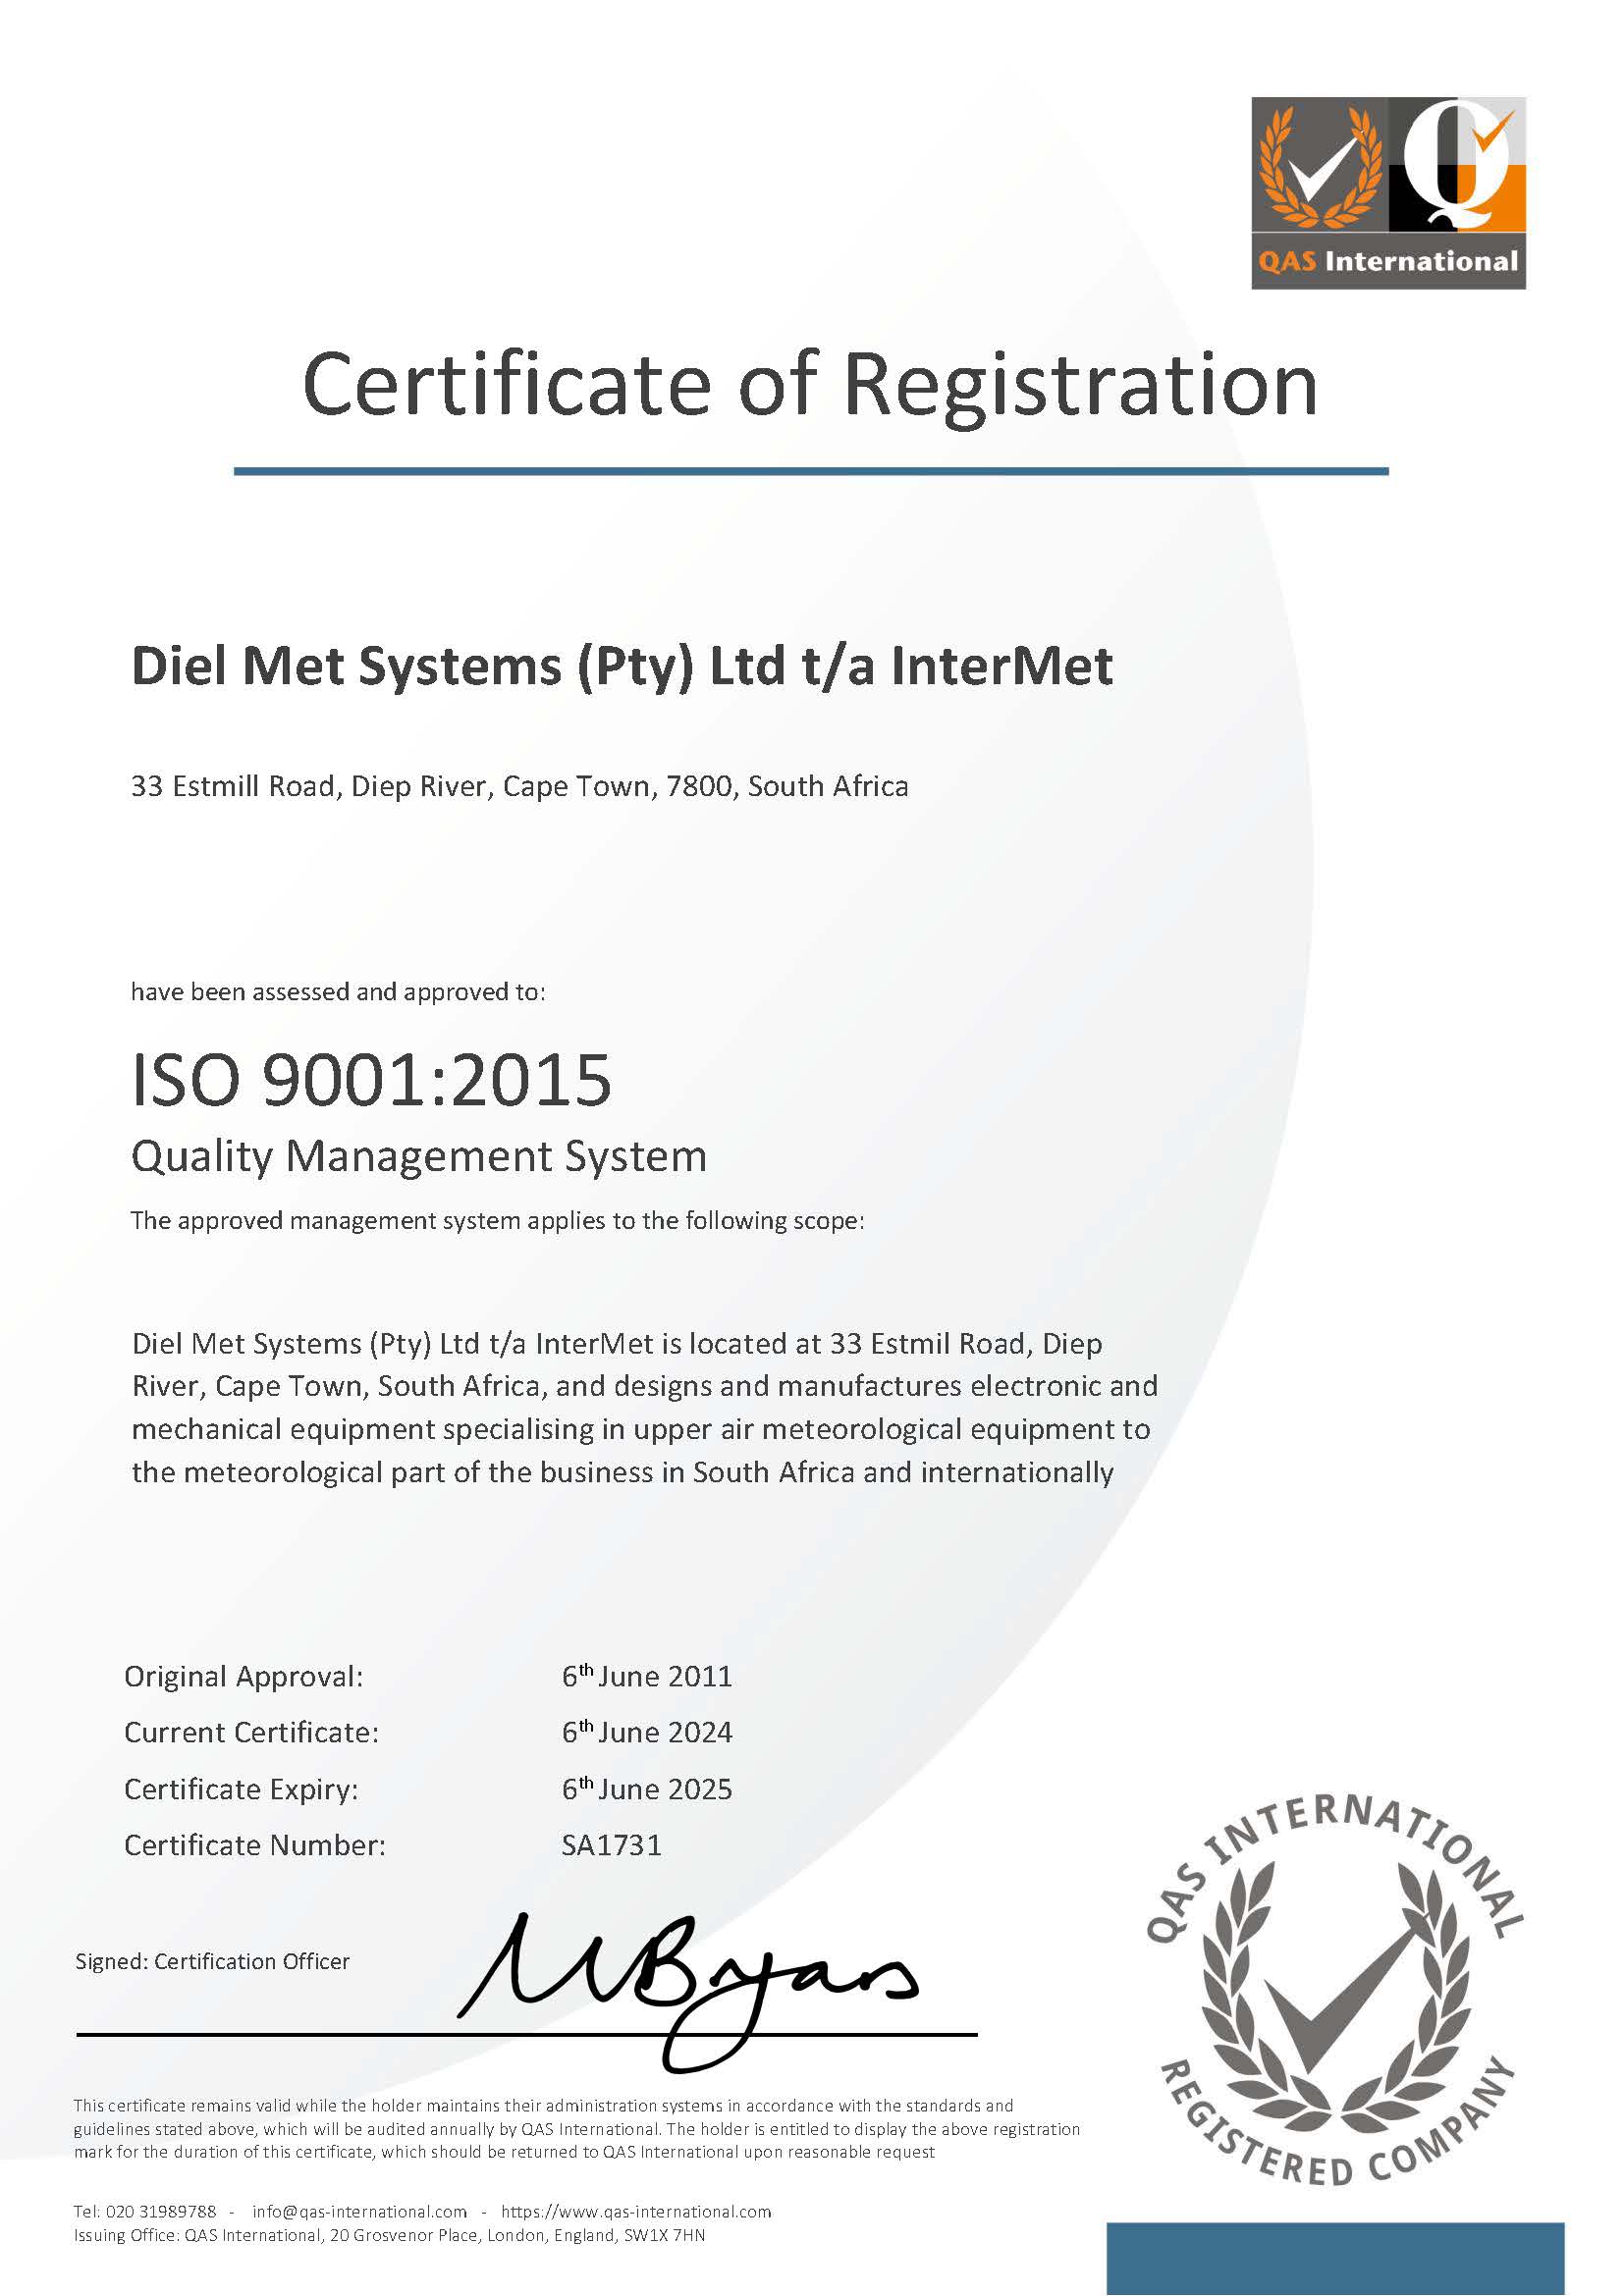 1731SA 24-25 - Diel Met Systems (Pty) Ltd